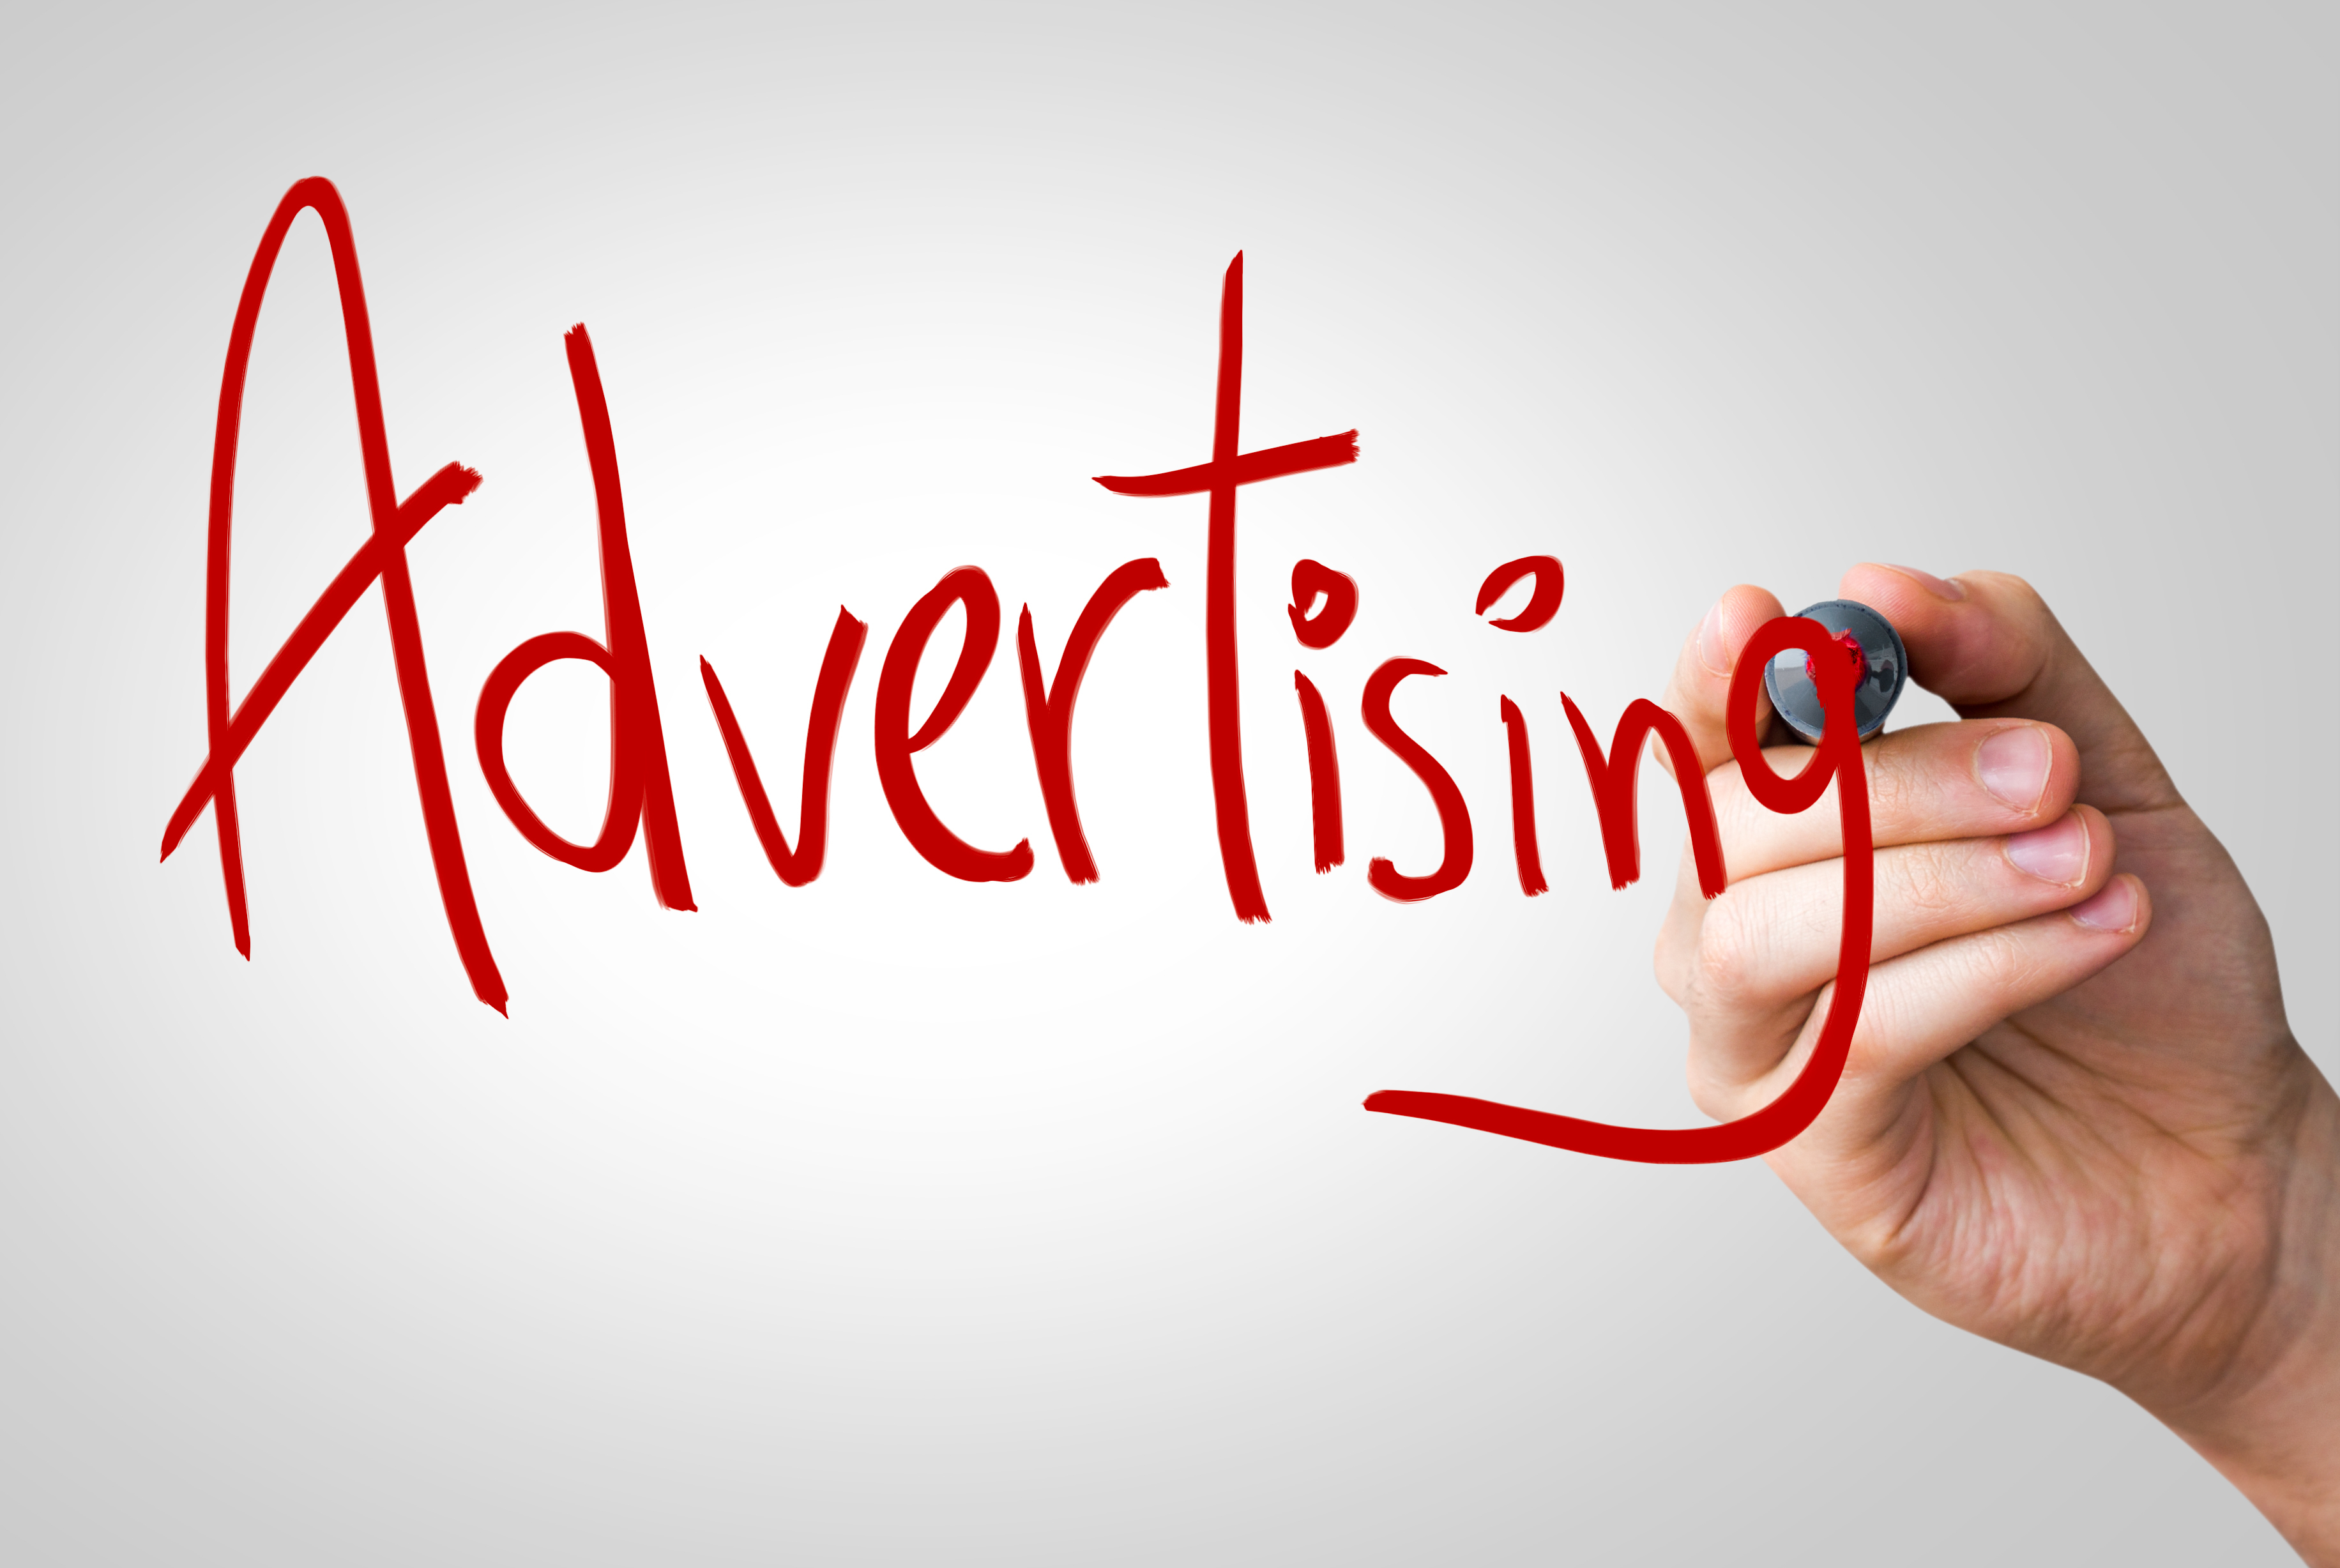 Advertising campaign is. Рекламные картинки. Реклама изображение. Картинки на тему реклама. Advertising надпись.